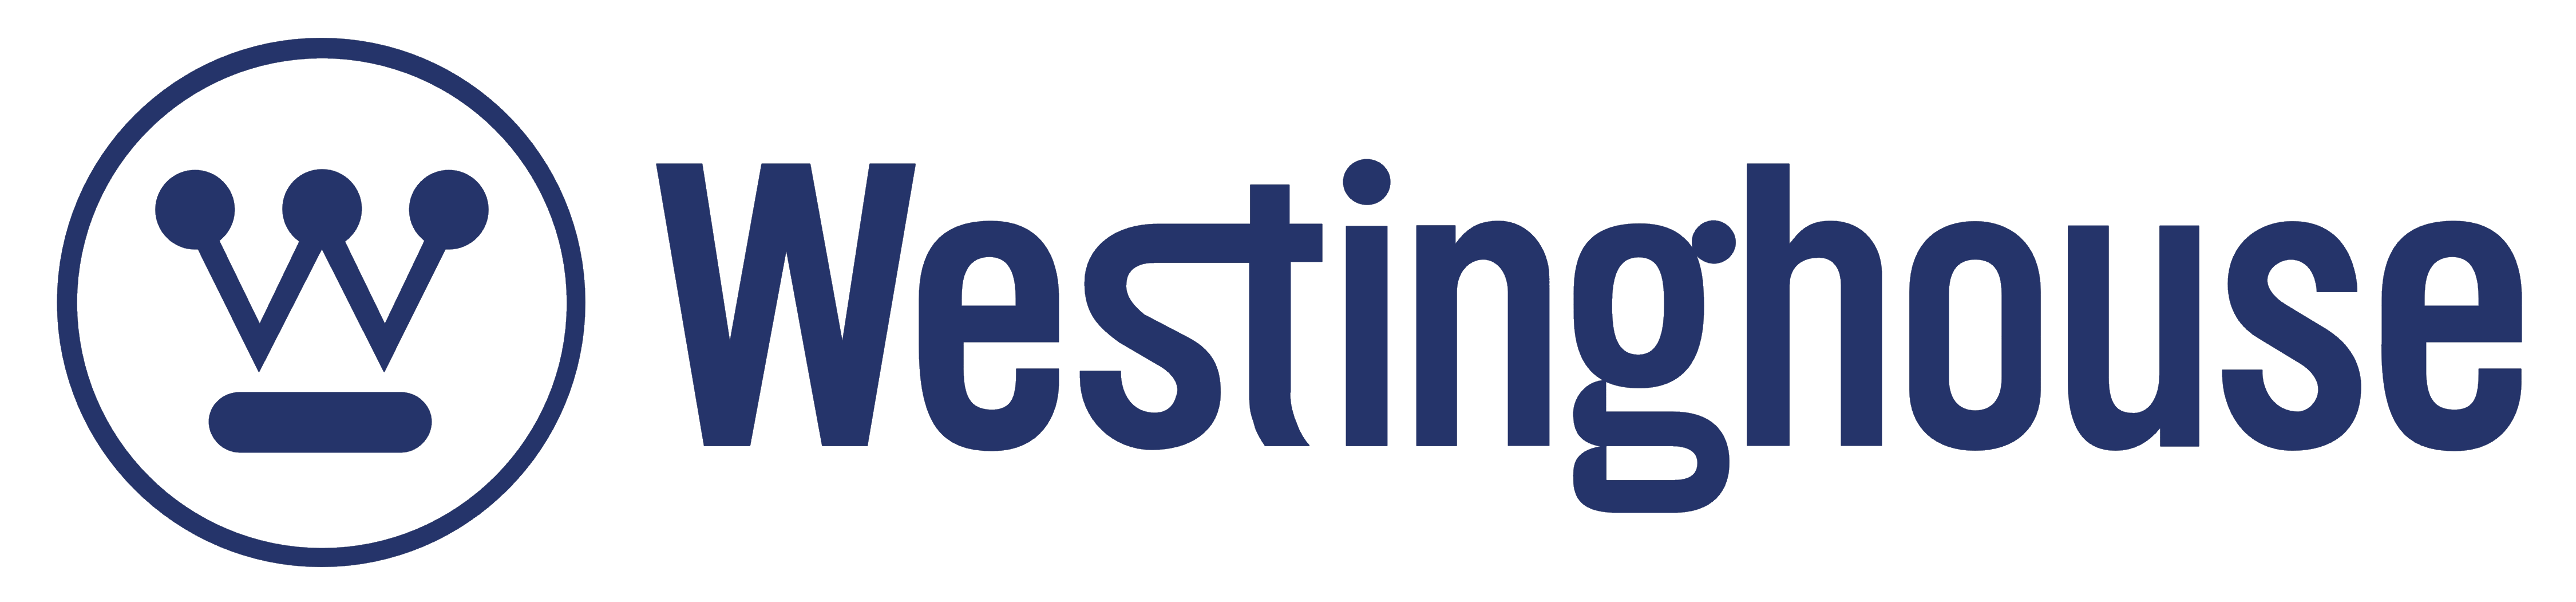 Westinghouse Logo PNG - 177594